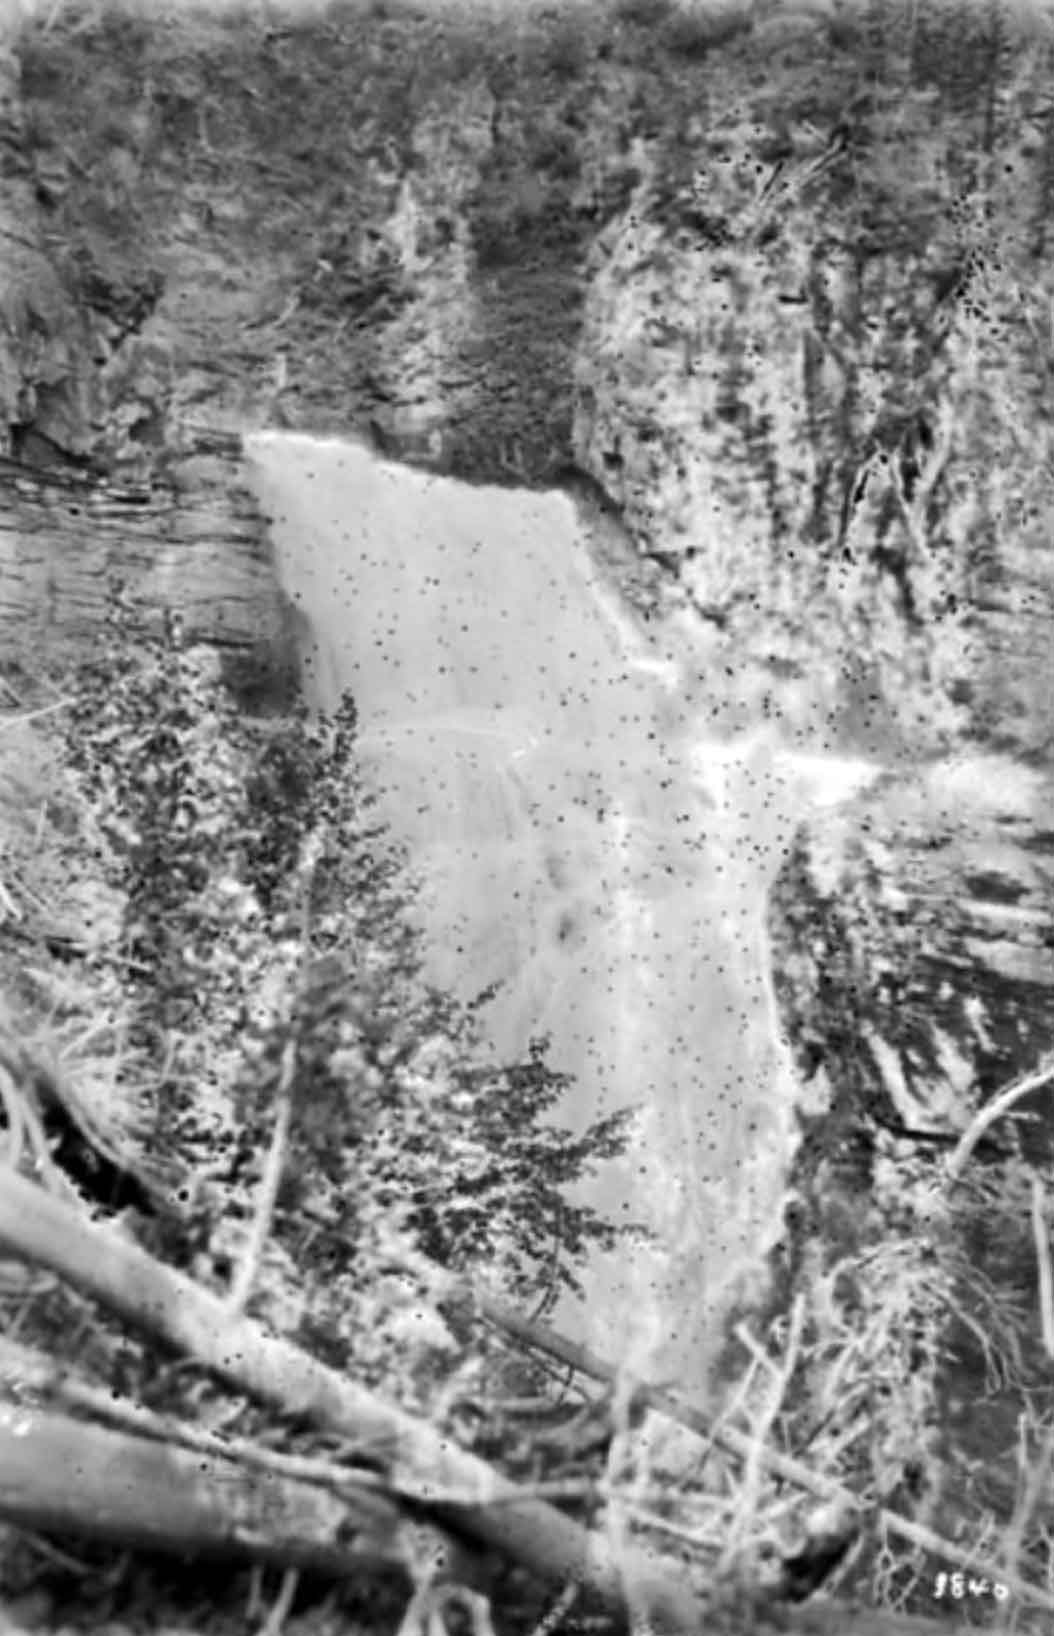 White Falls
William James Topley, 1914